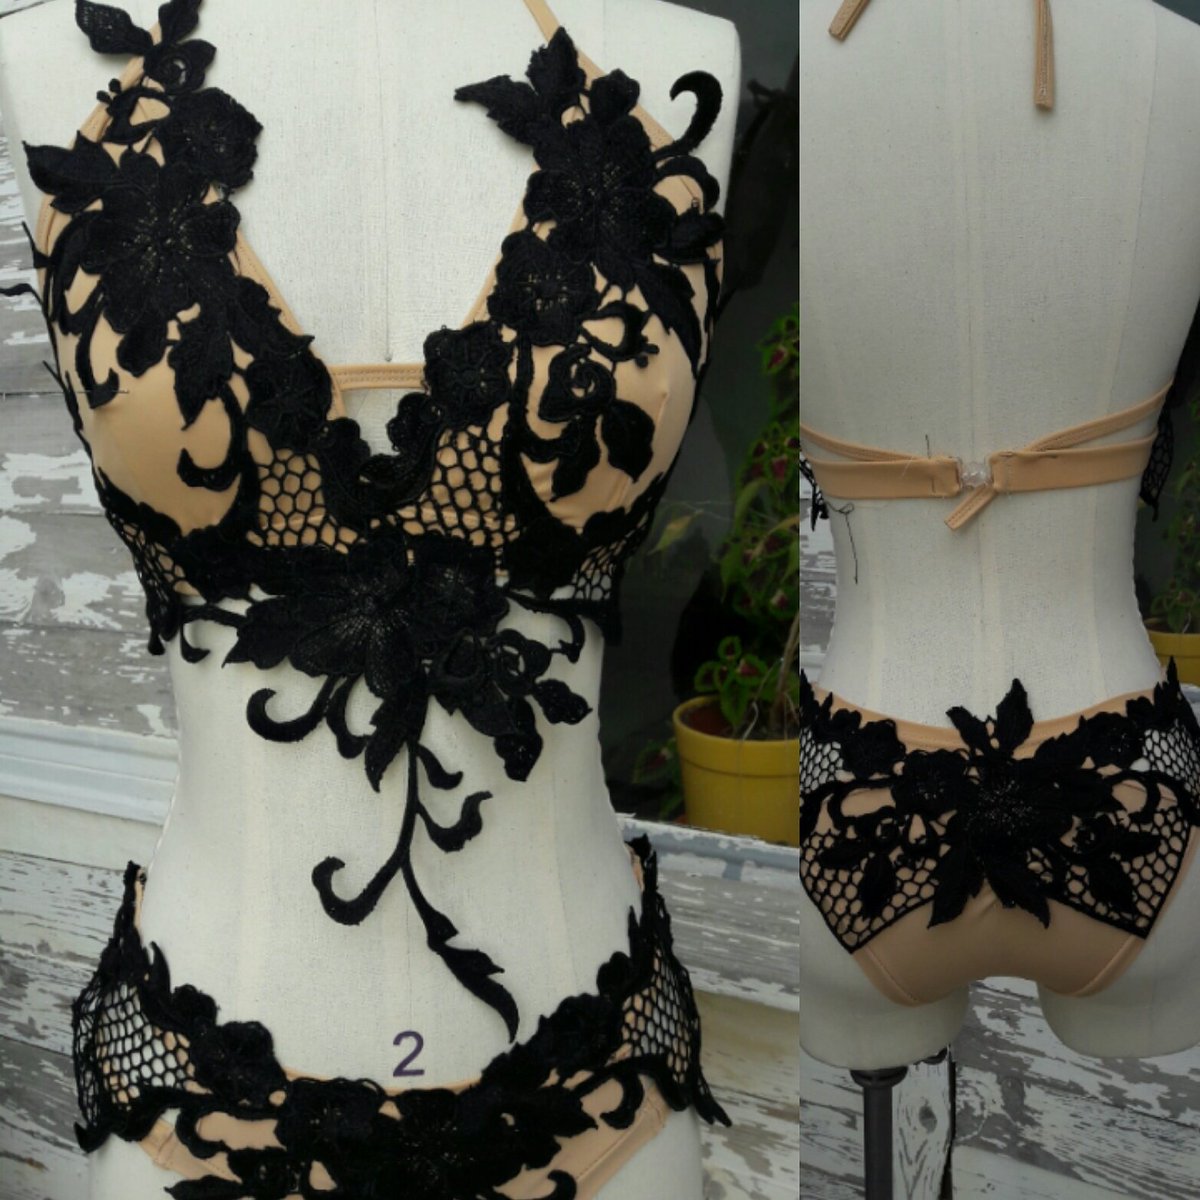 Pole Dance Costumes ar Twitter: "Pole dance costume.. black lace motif on  nude lycra https://t.co/G8cBj60txG" / Twitter